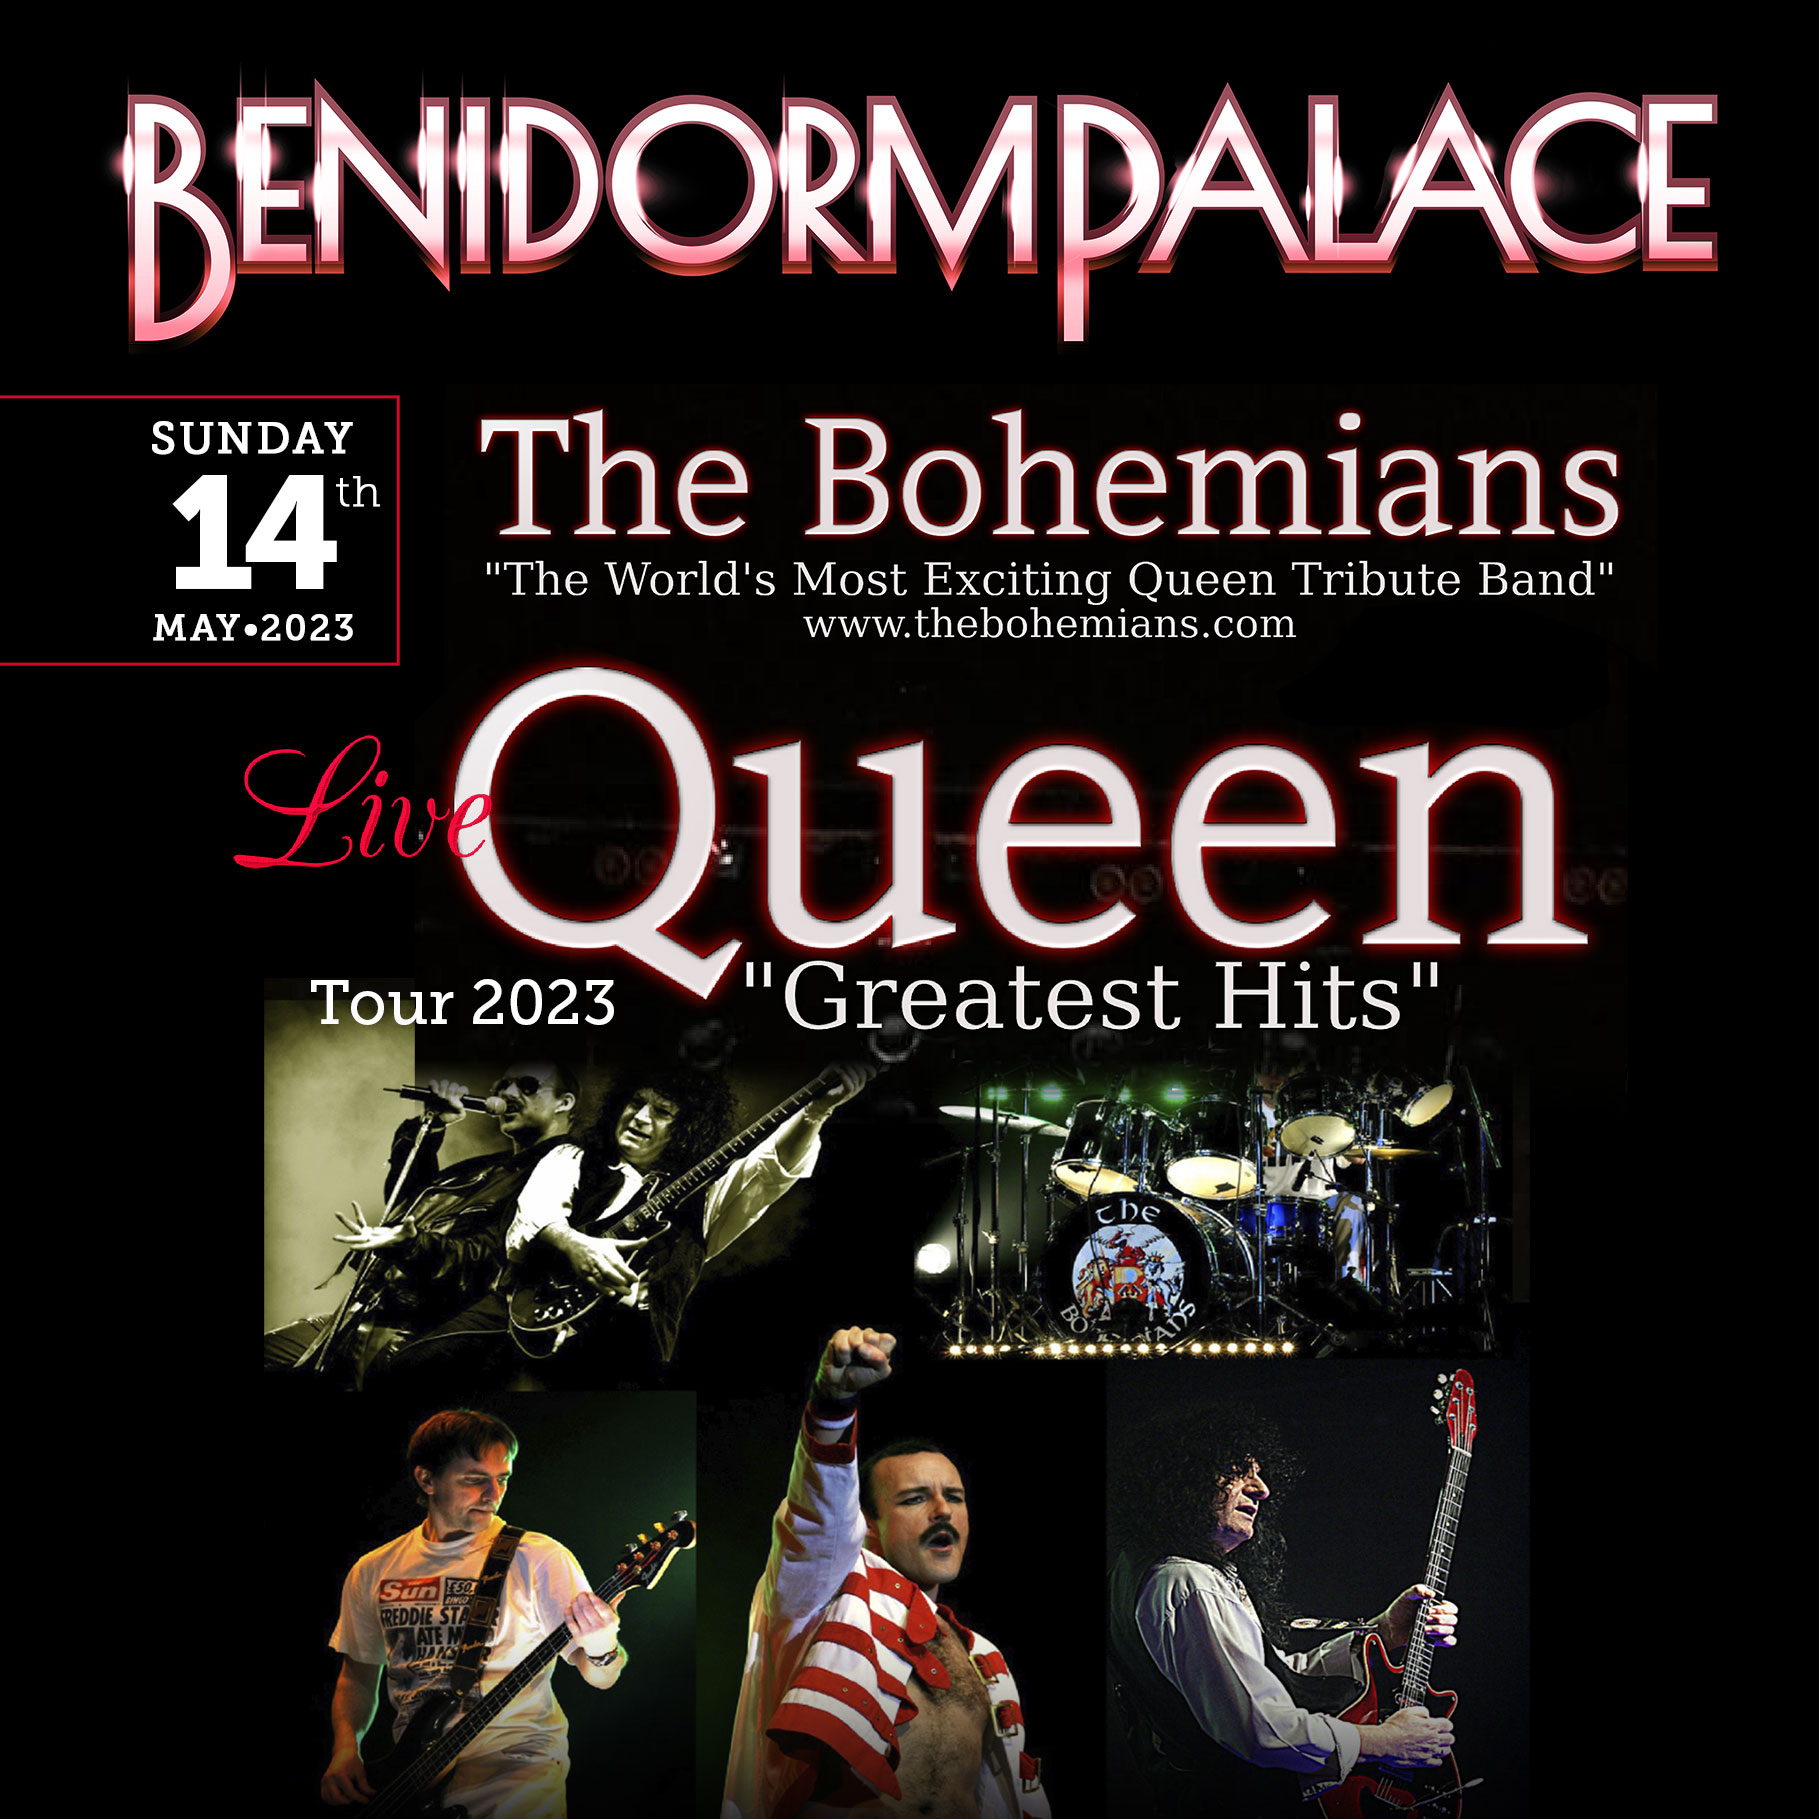 The BohemiansQueen Benidorm Palace